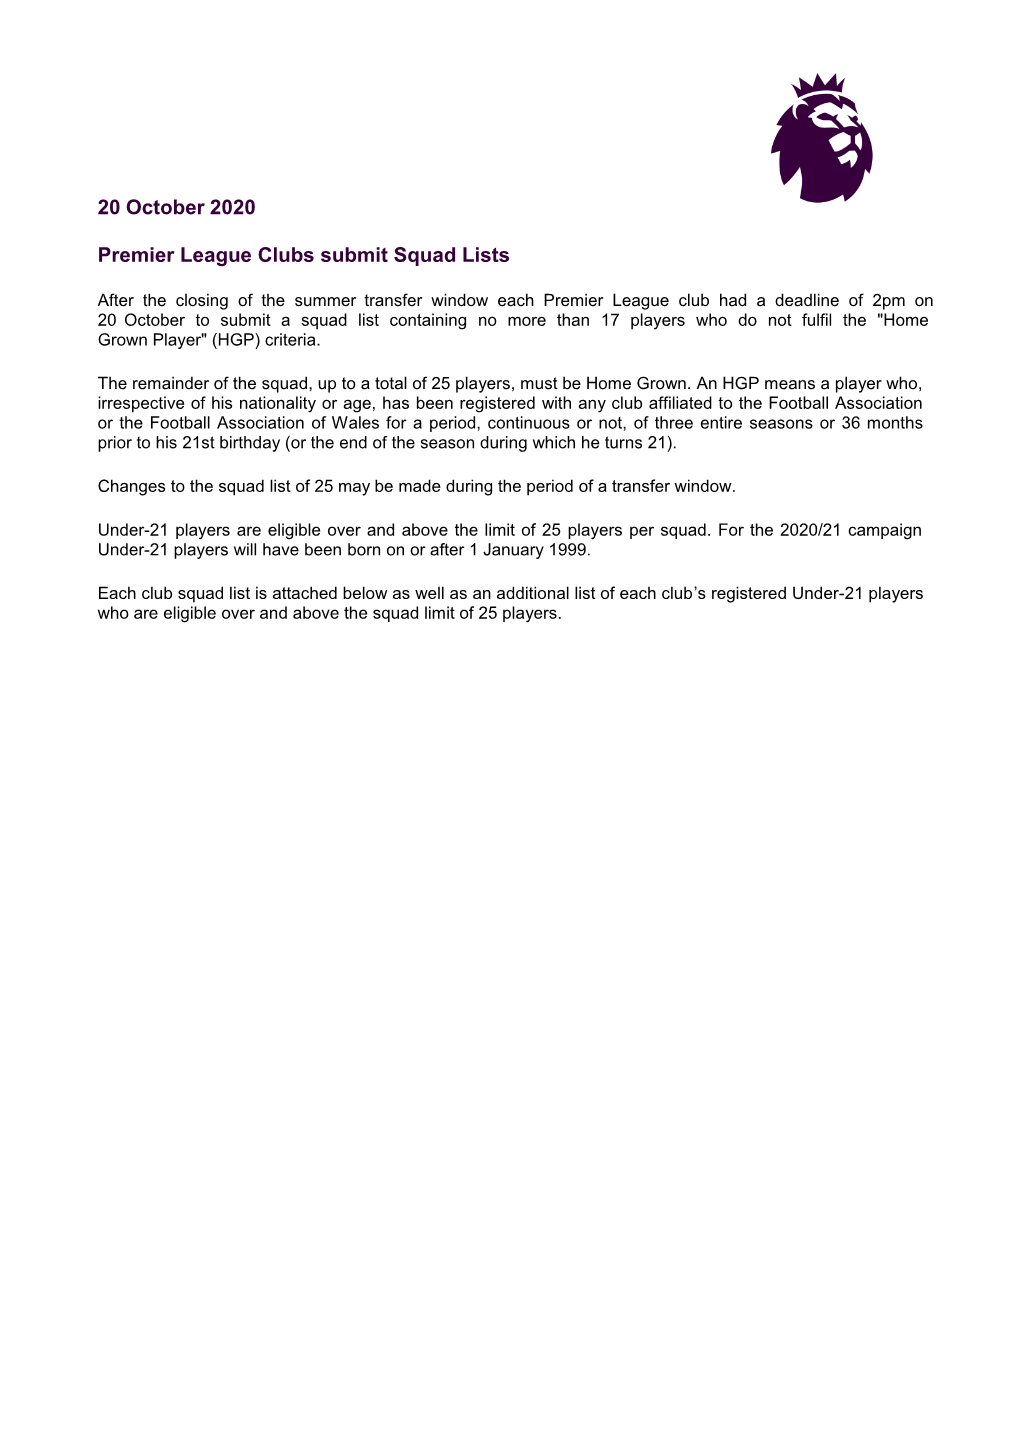 20 October 2020 Premier League Clubs Submit Squad Lists